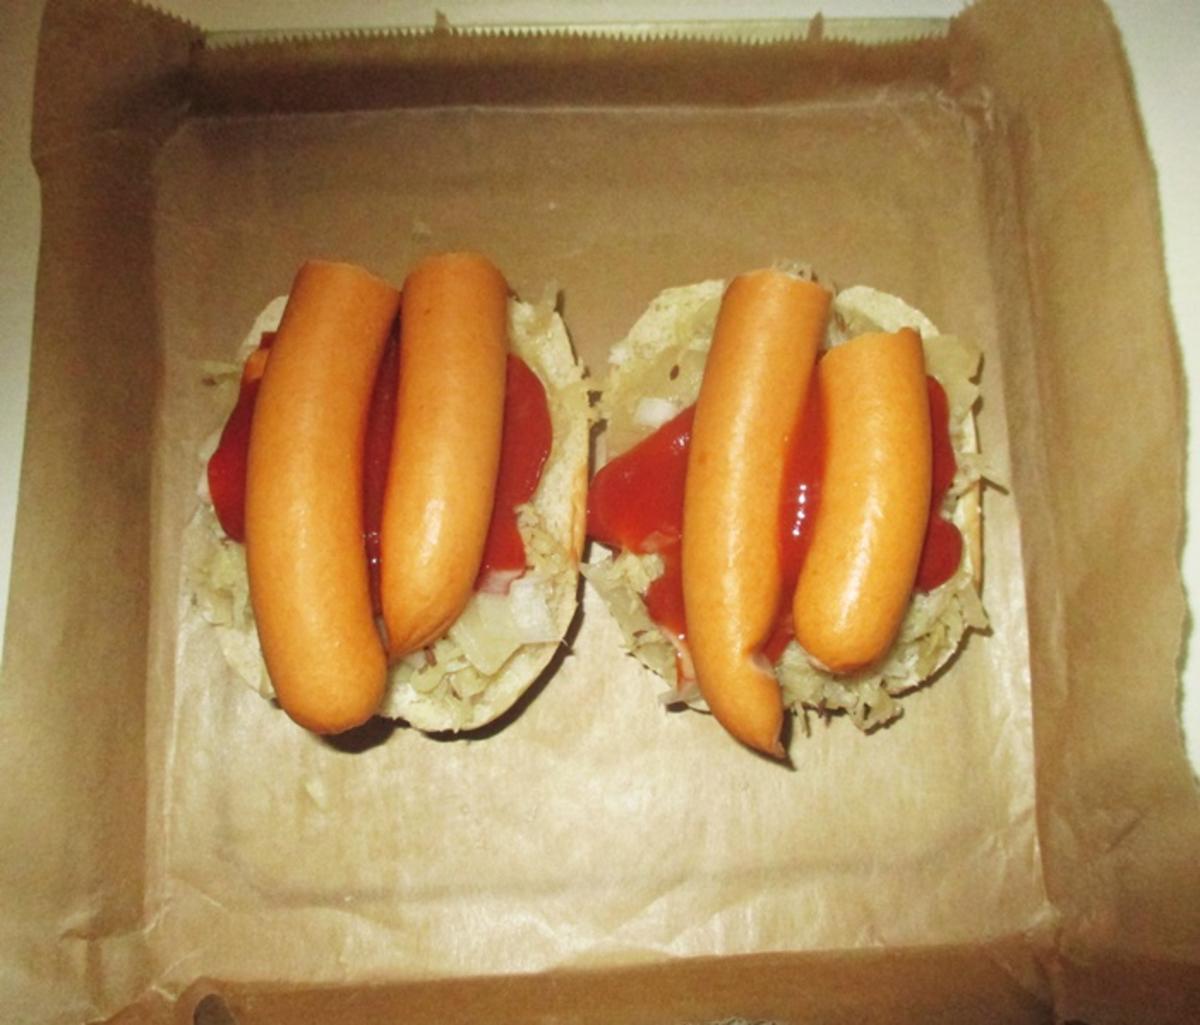 Eine Art Hot Dog- Resteverwertung mit Sauerkraut-Kochbar Challenge 9.0 (September 2020) - Rezept - Bild Nr. 4